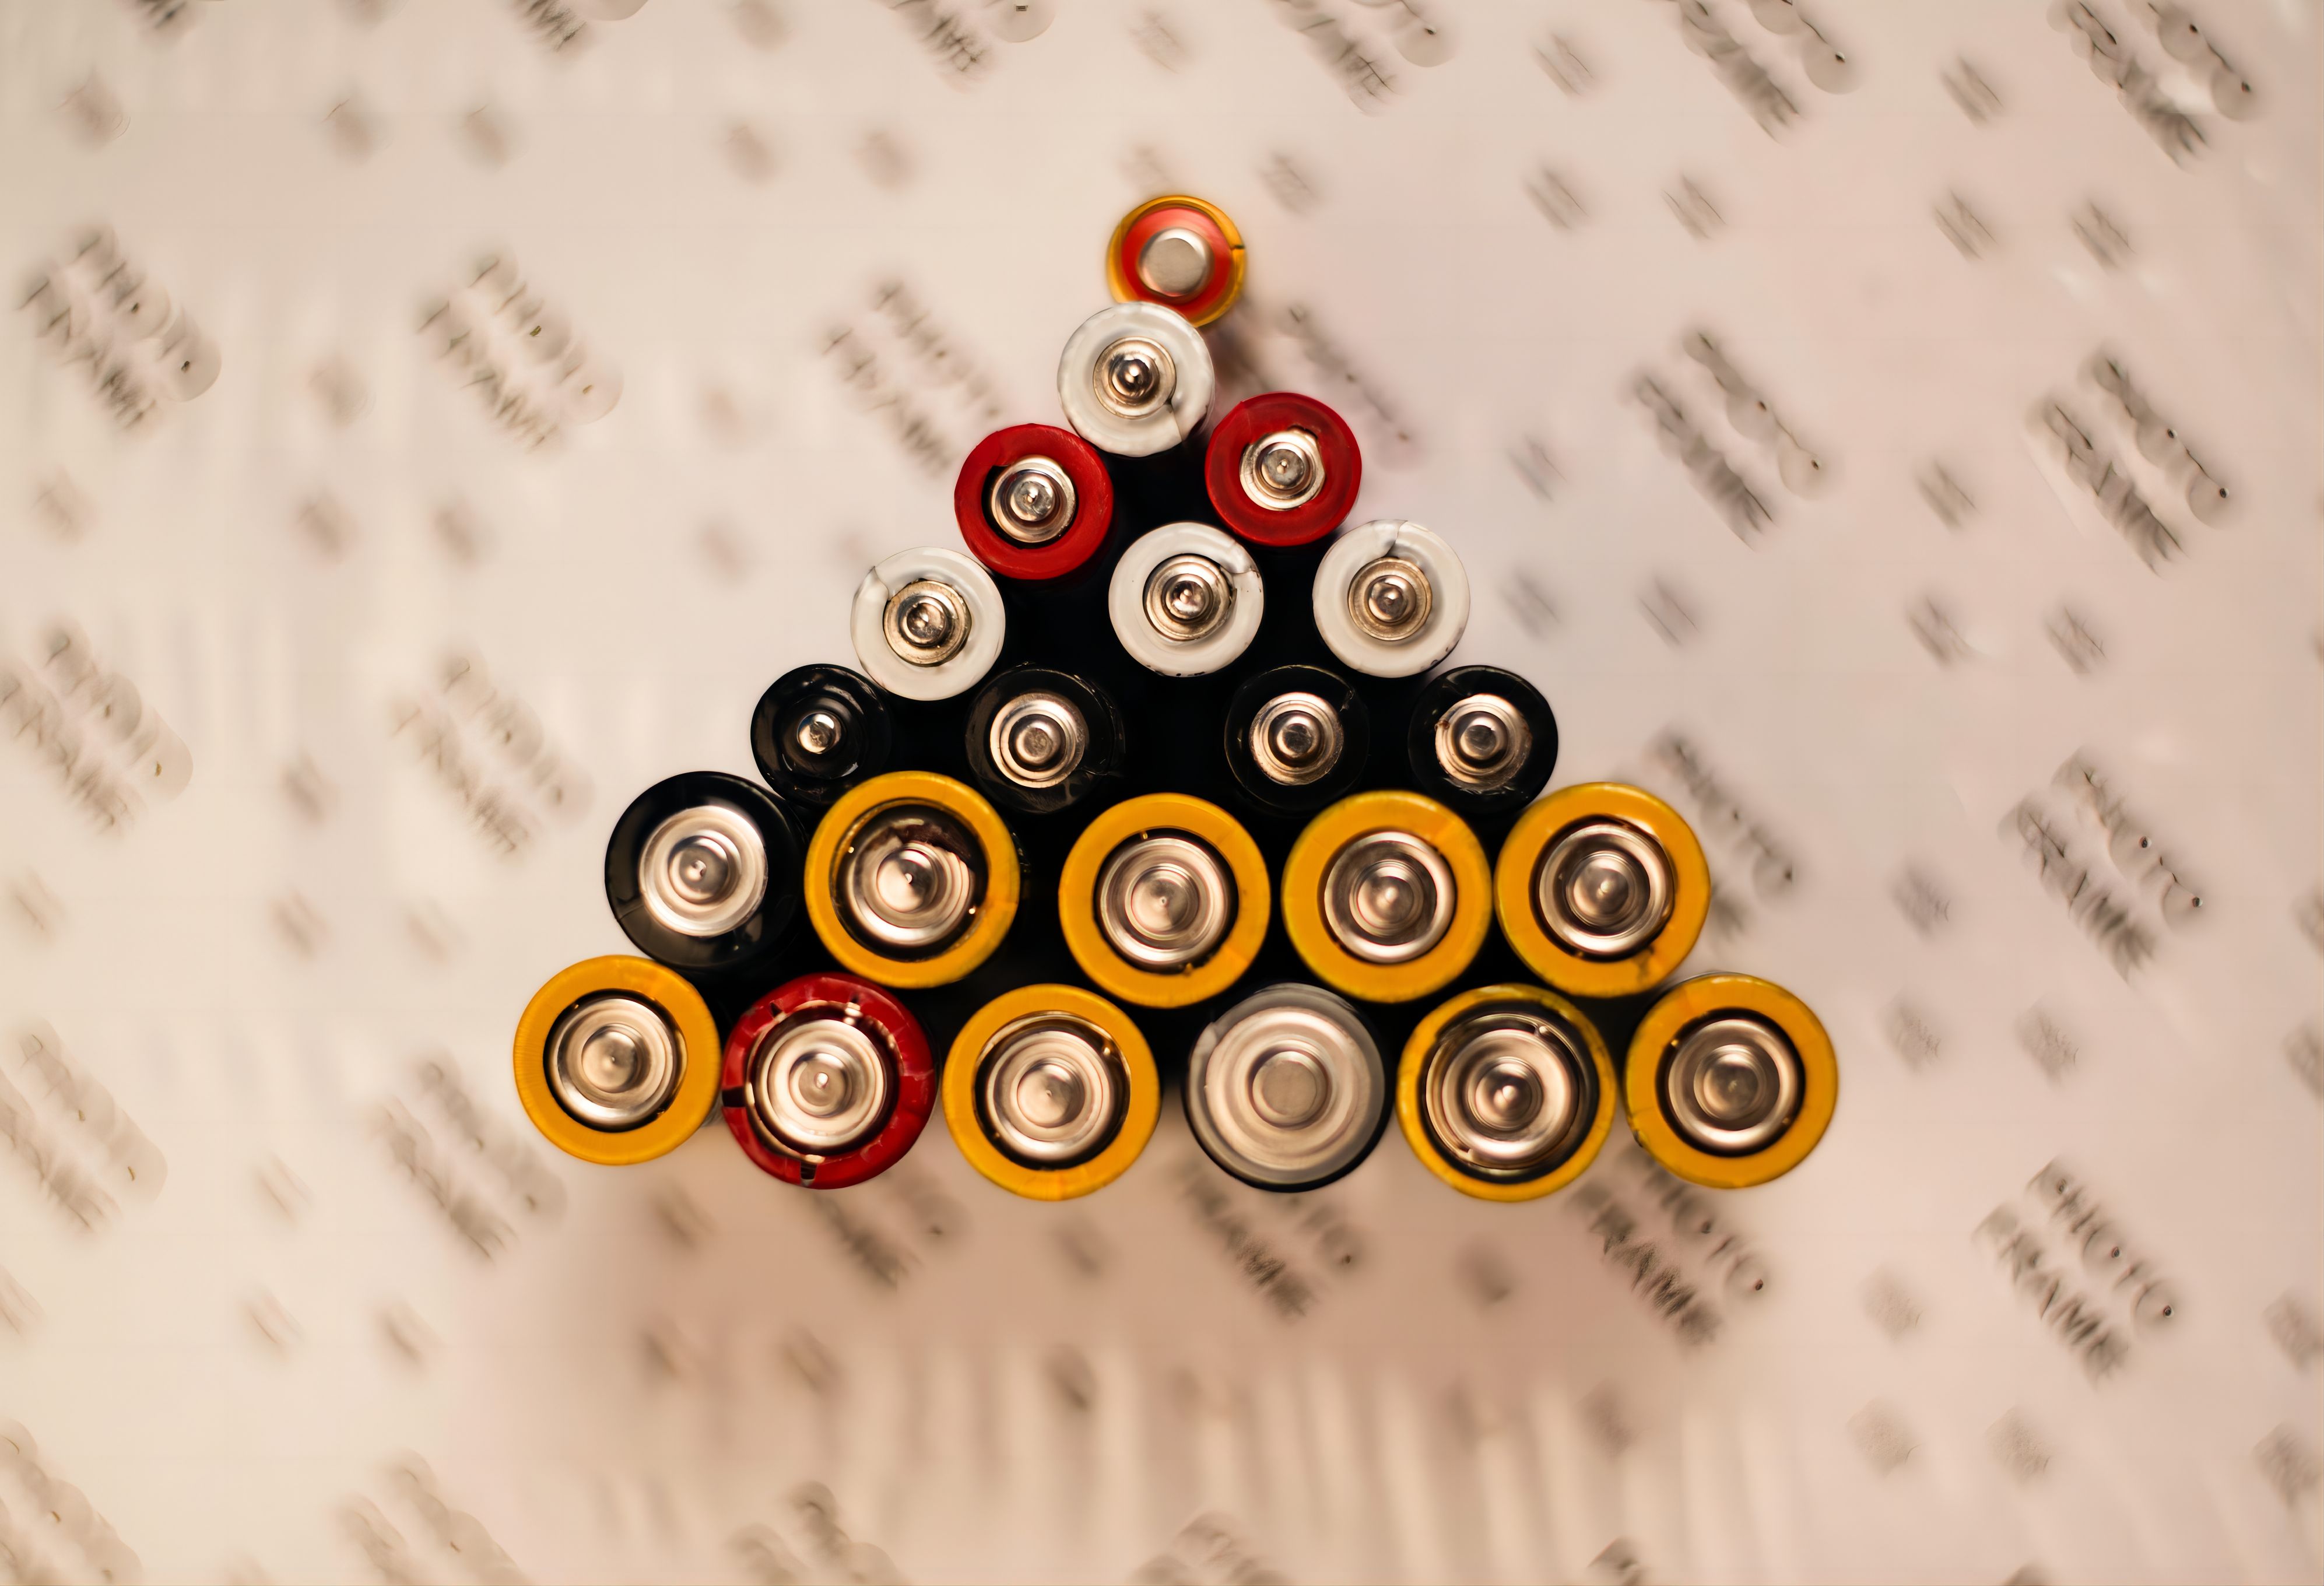 NiMH акумулаторните батерии текат ли като алкалните батерии?|УЕЙДЗЯН